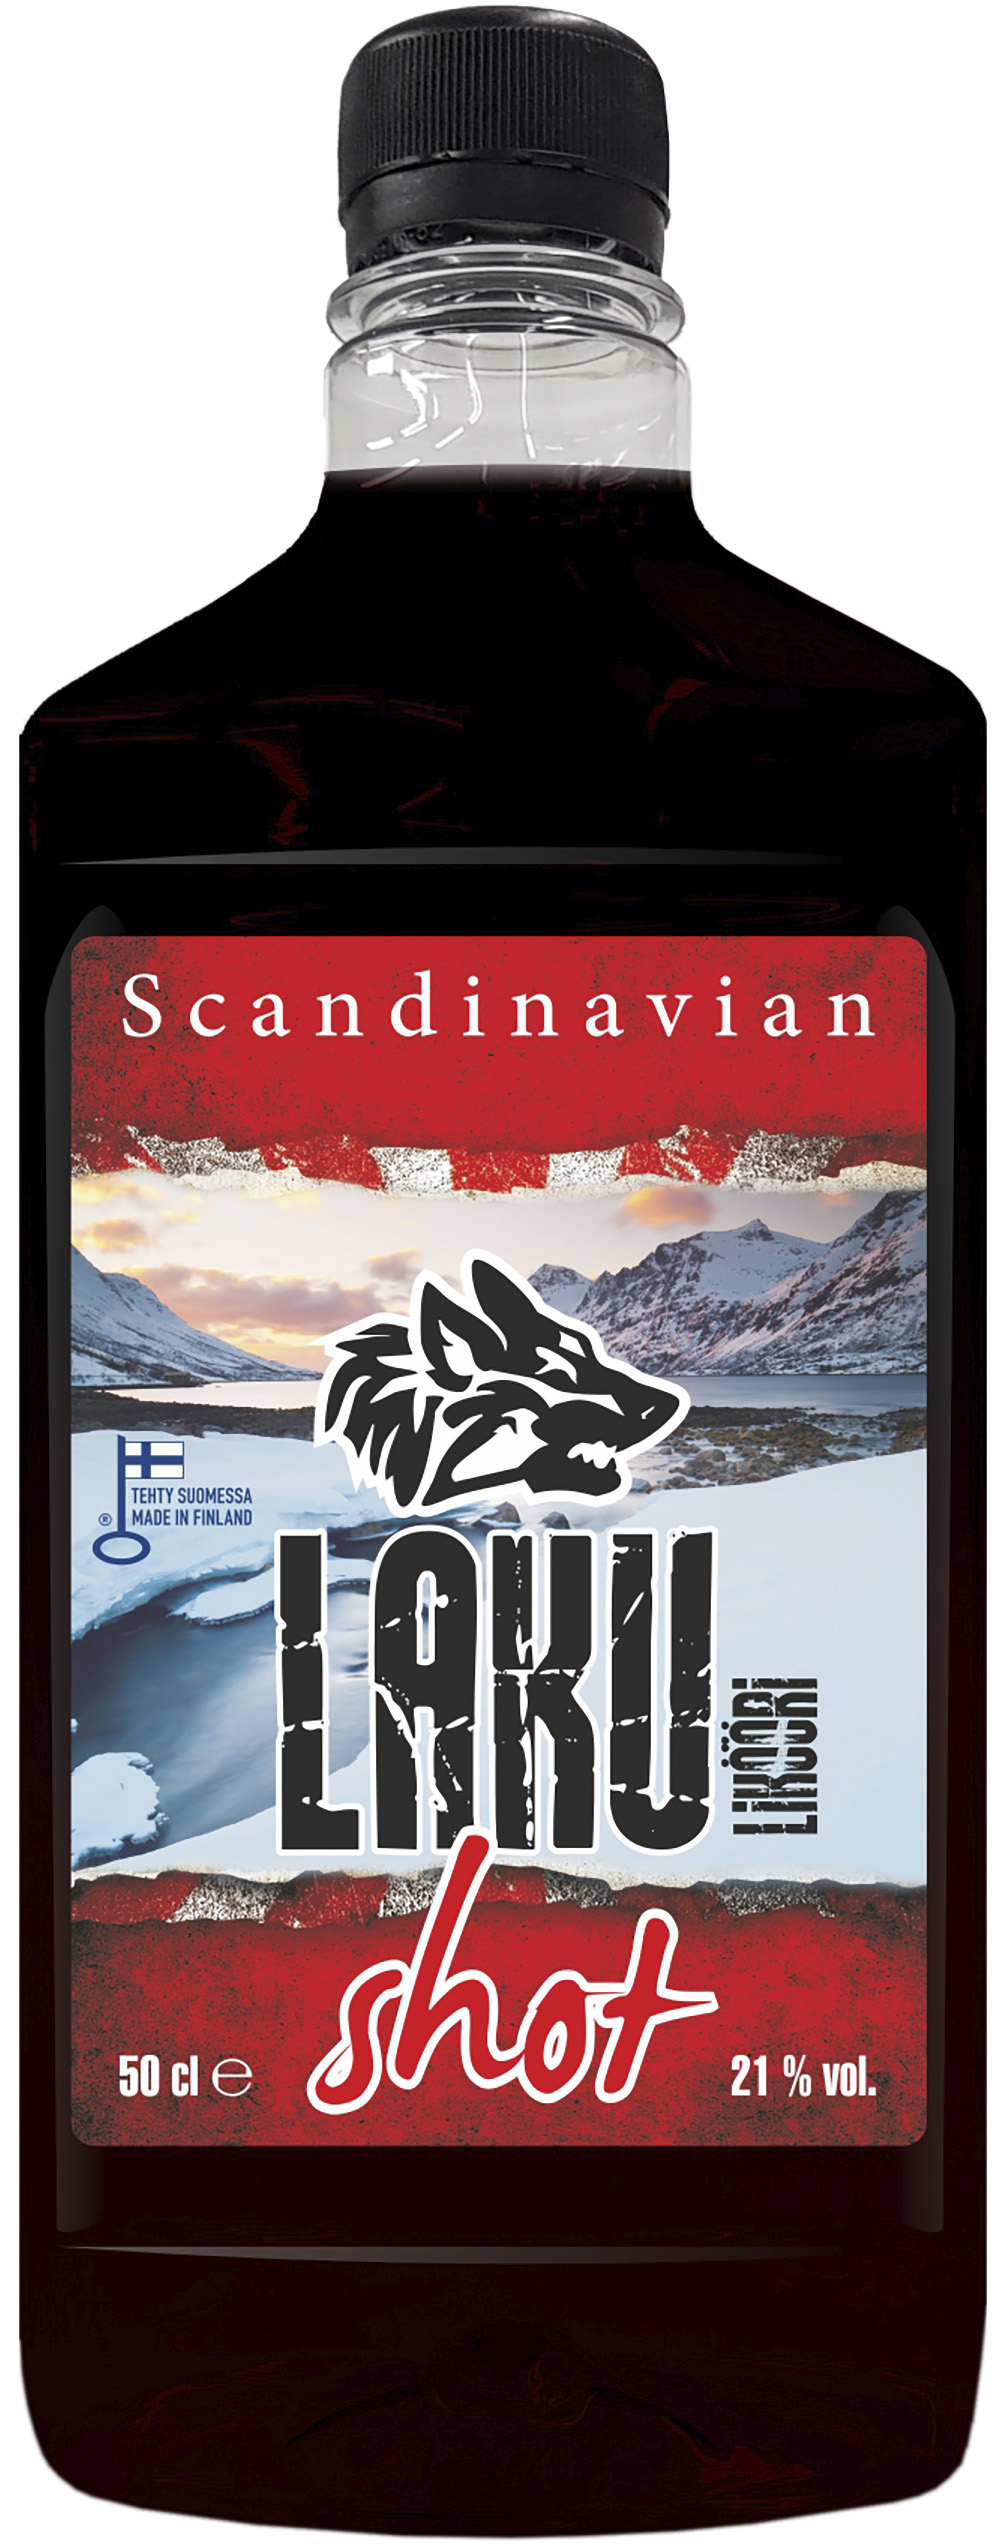 Scandinavian Laku Shot plastic bottle